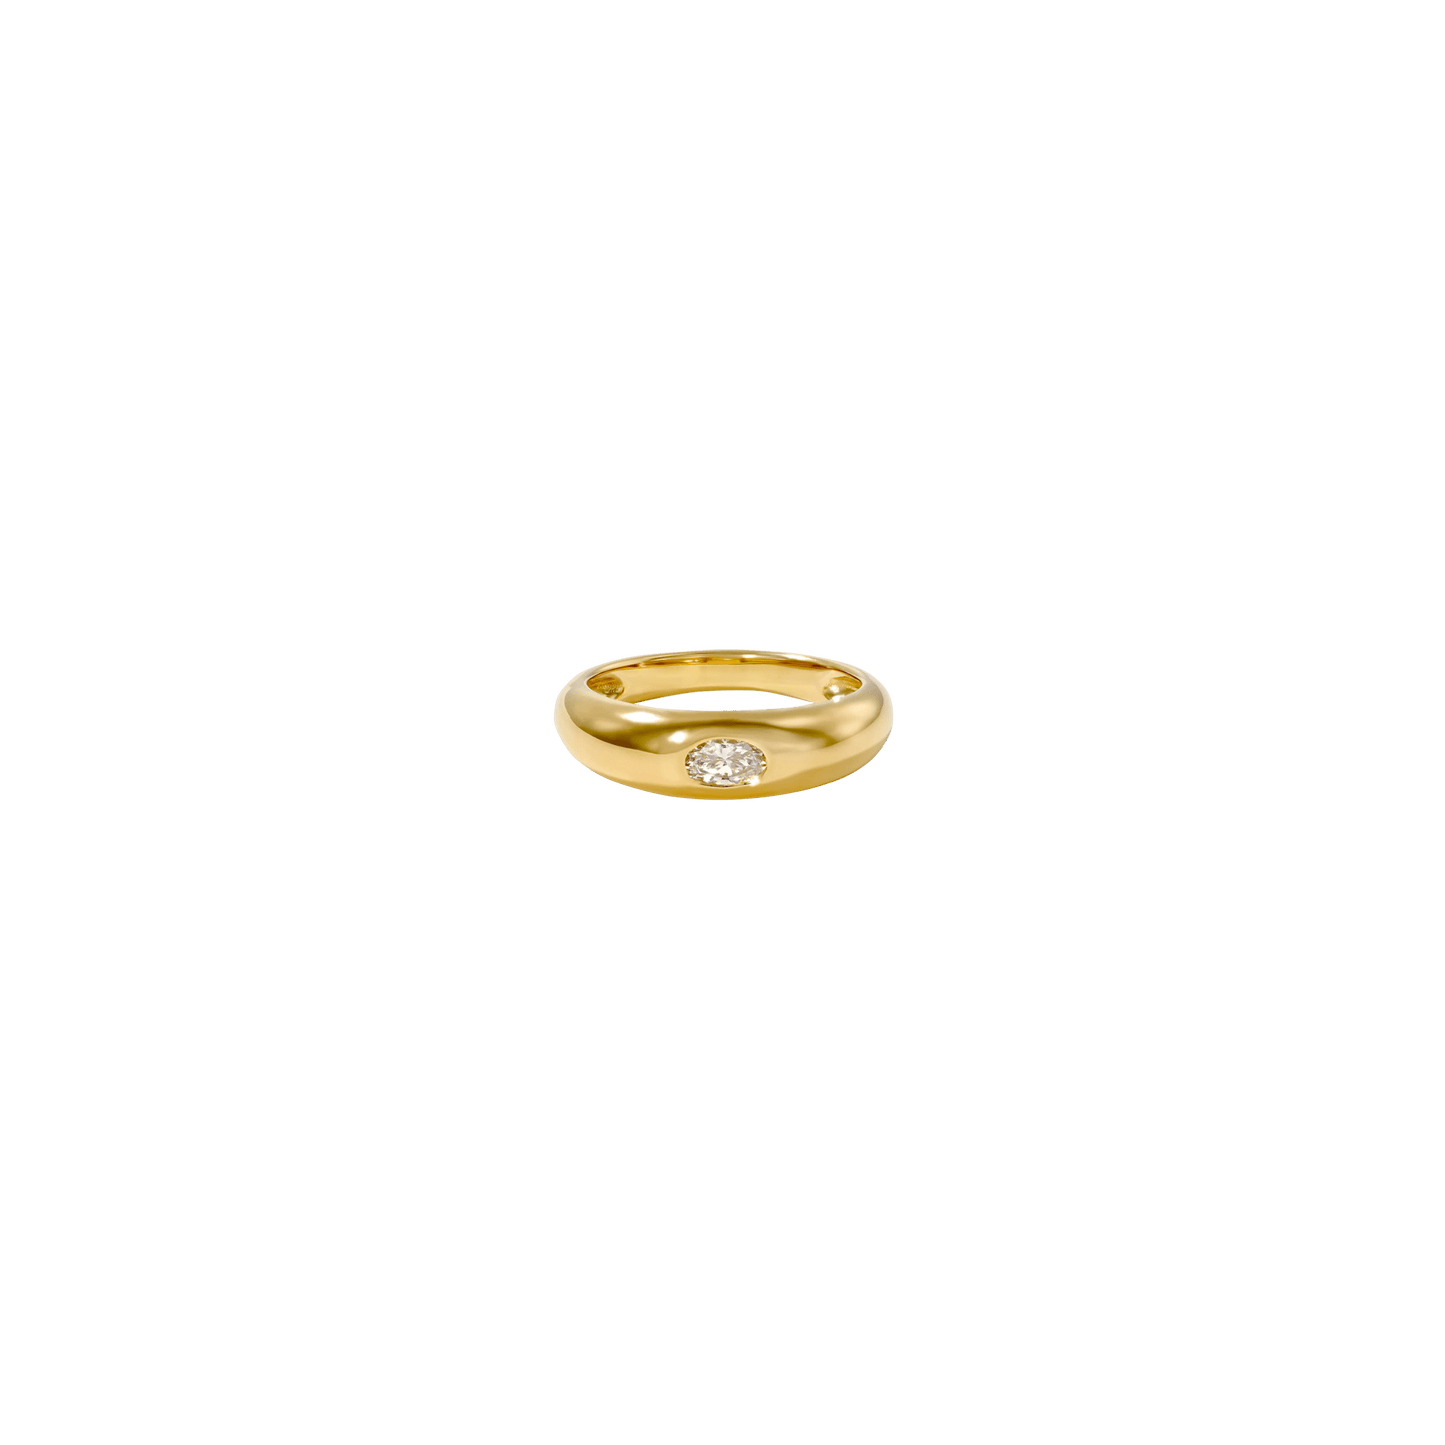 Dominique Ring - 18K Gold Vermeil Rings magal-dev US 4 